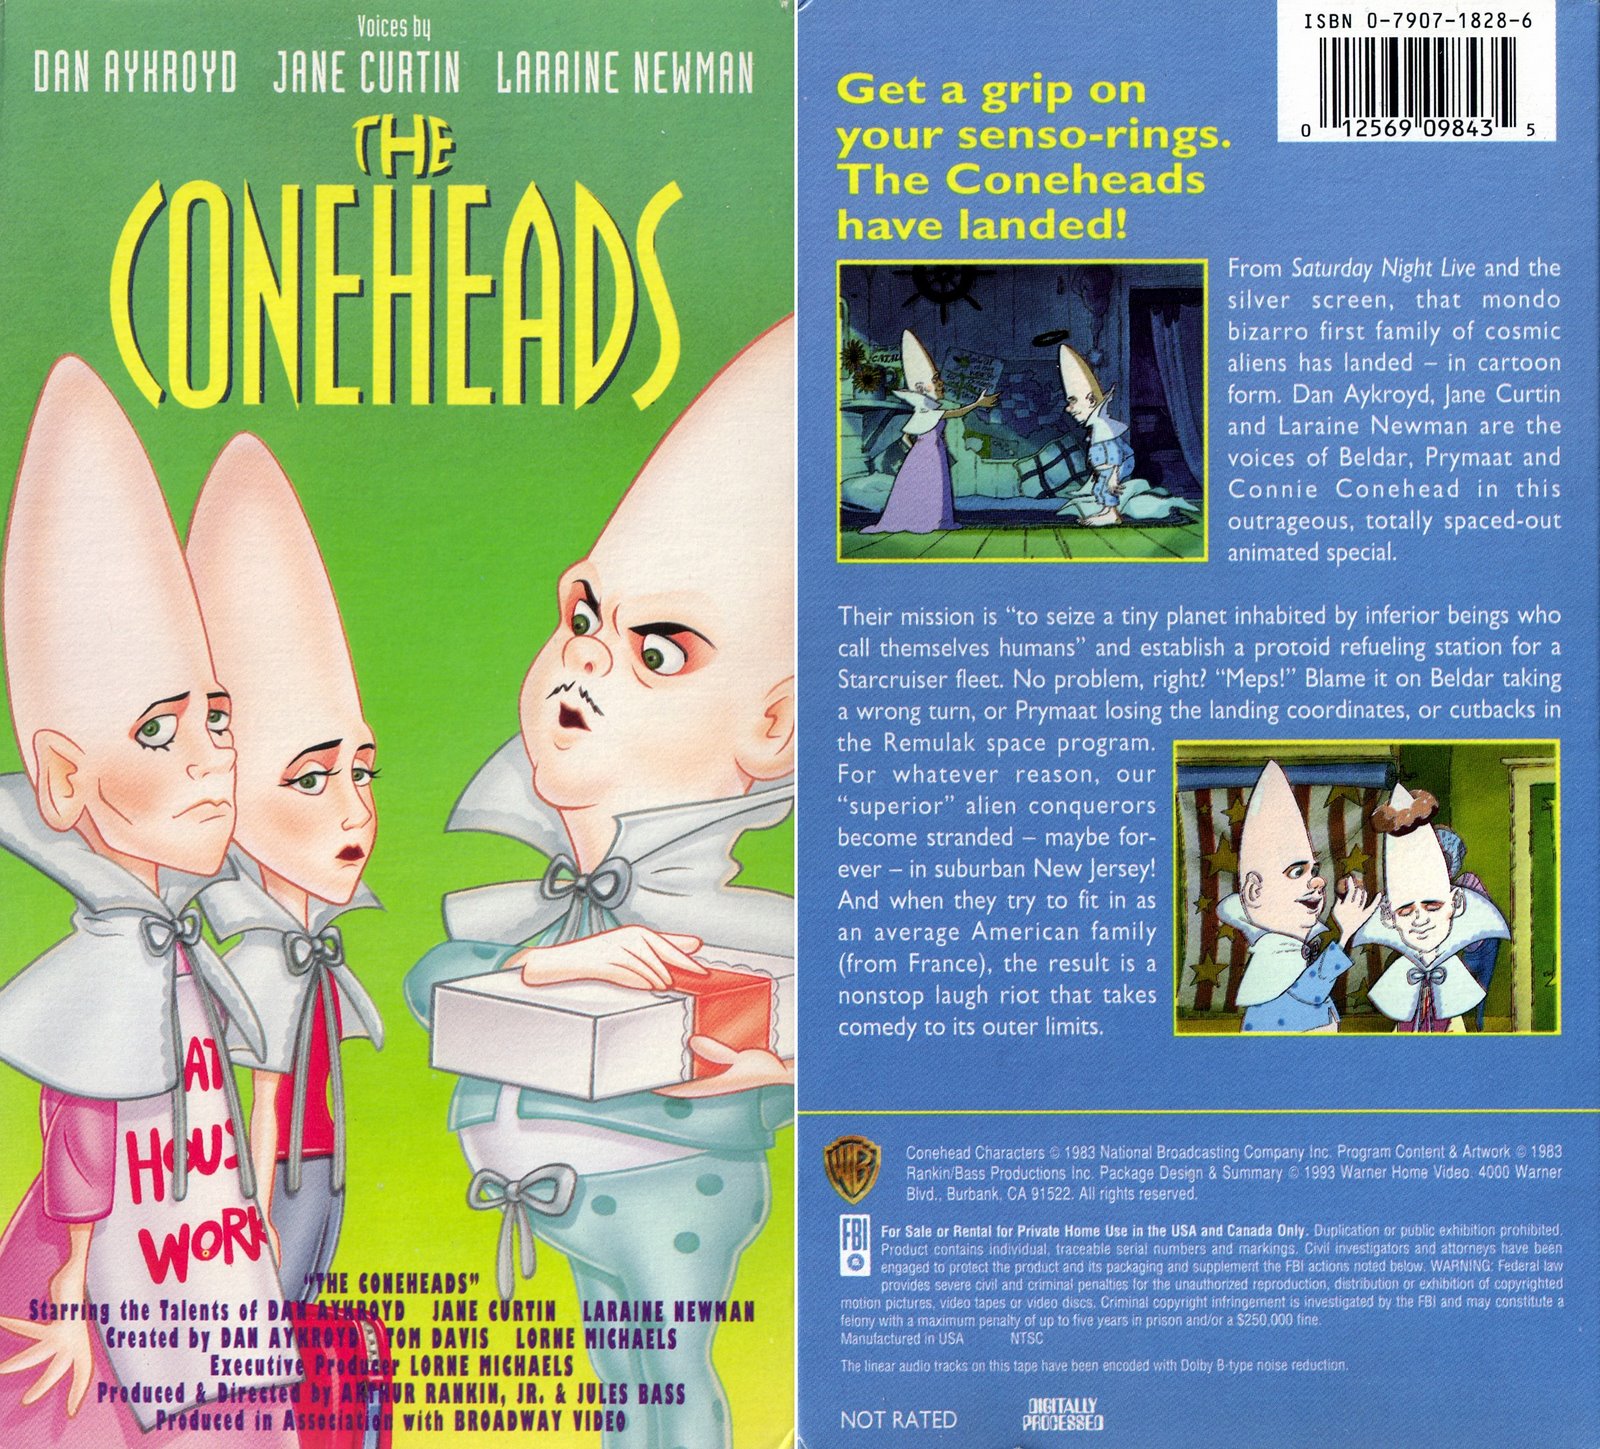 The Coneheads (1983) Screenshot 3 